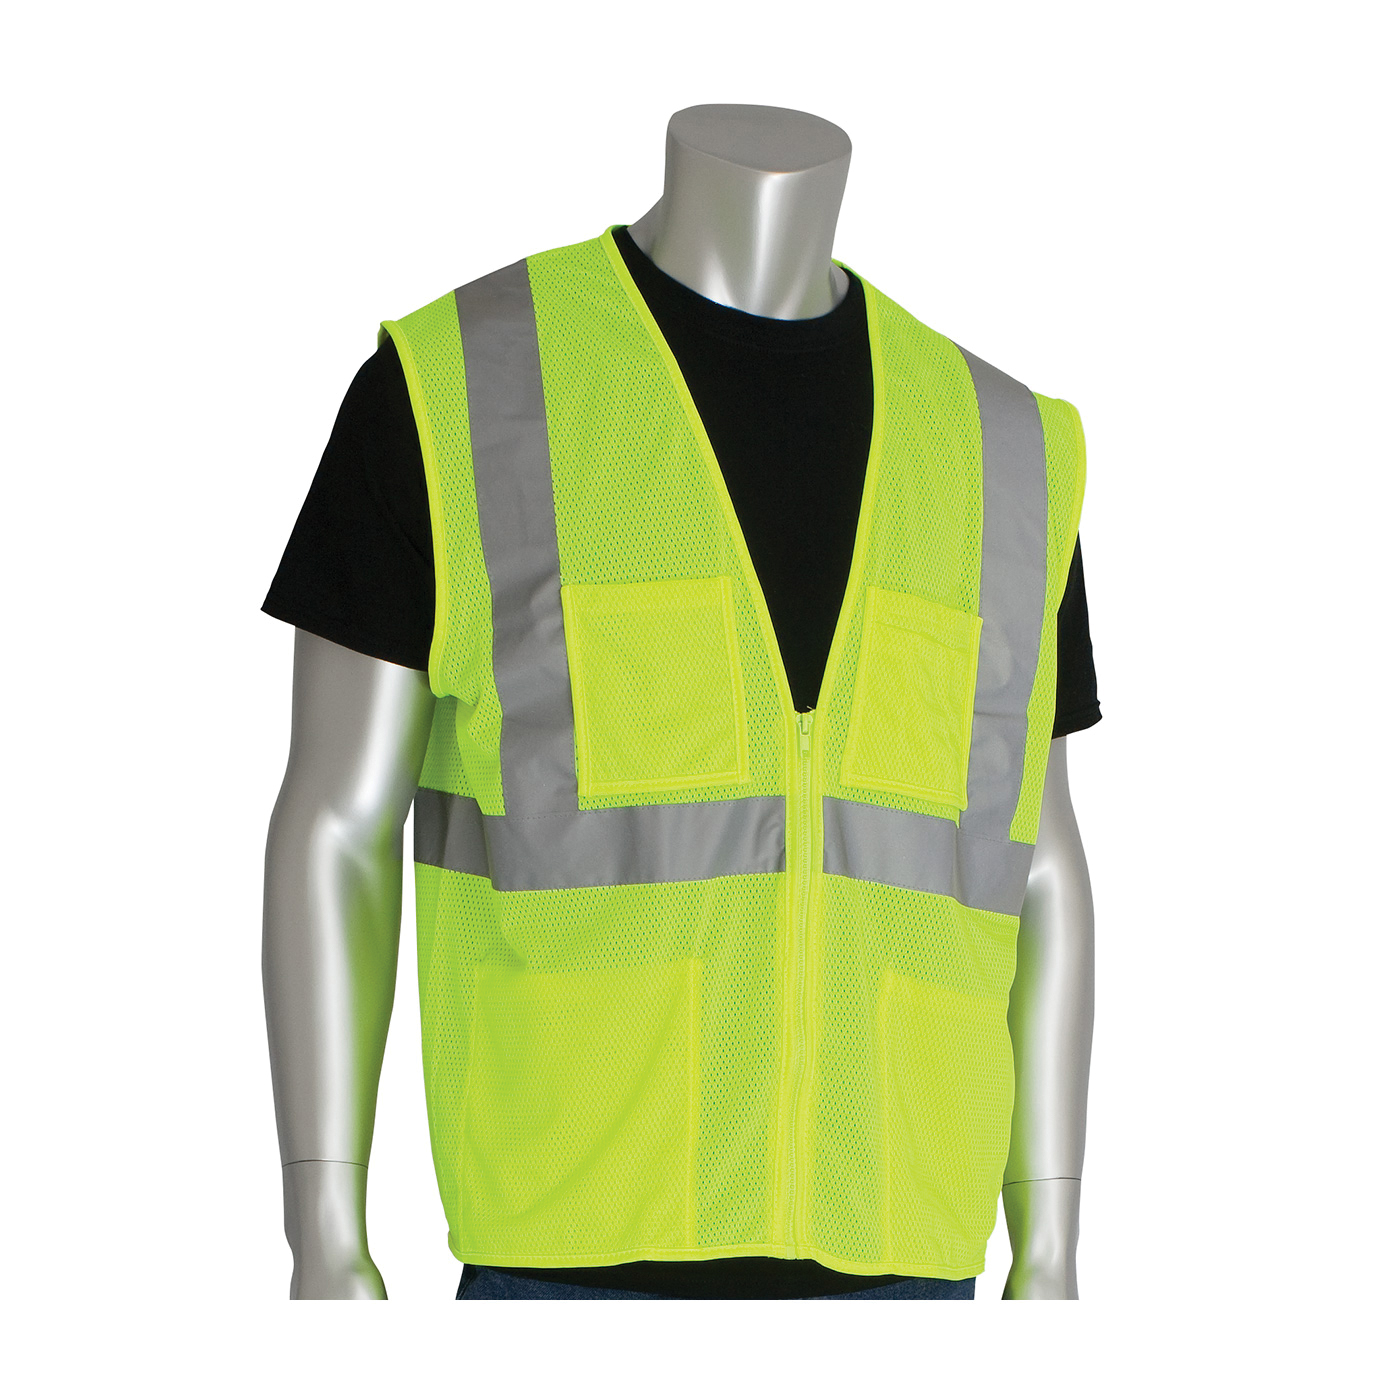 PIP® 302-MVGZ4PLY-XL Safety Vest, XL, Hi-Viz Lime Yellow, Polyester Mesh, Zipper Closure, 4 Pockets, ANSI Class: Class 2, Specifications Met: ANSI 107 Type R